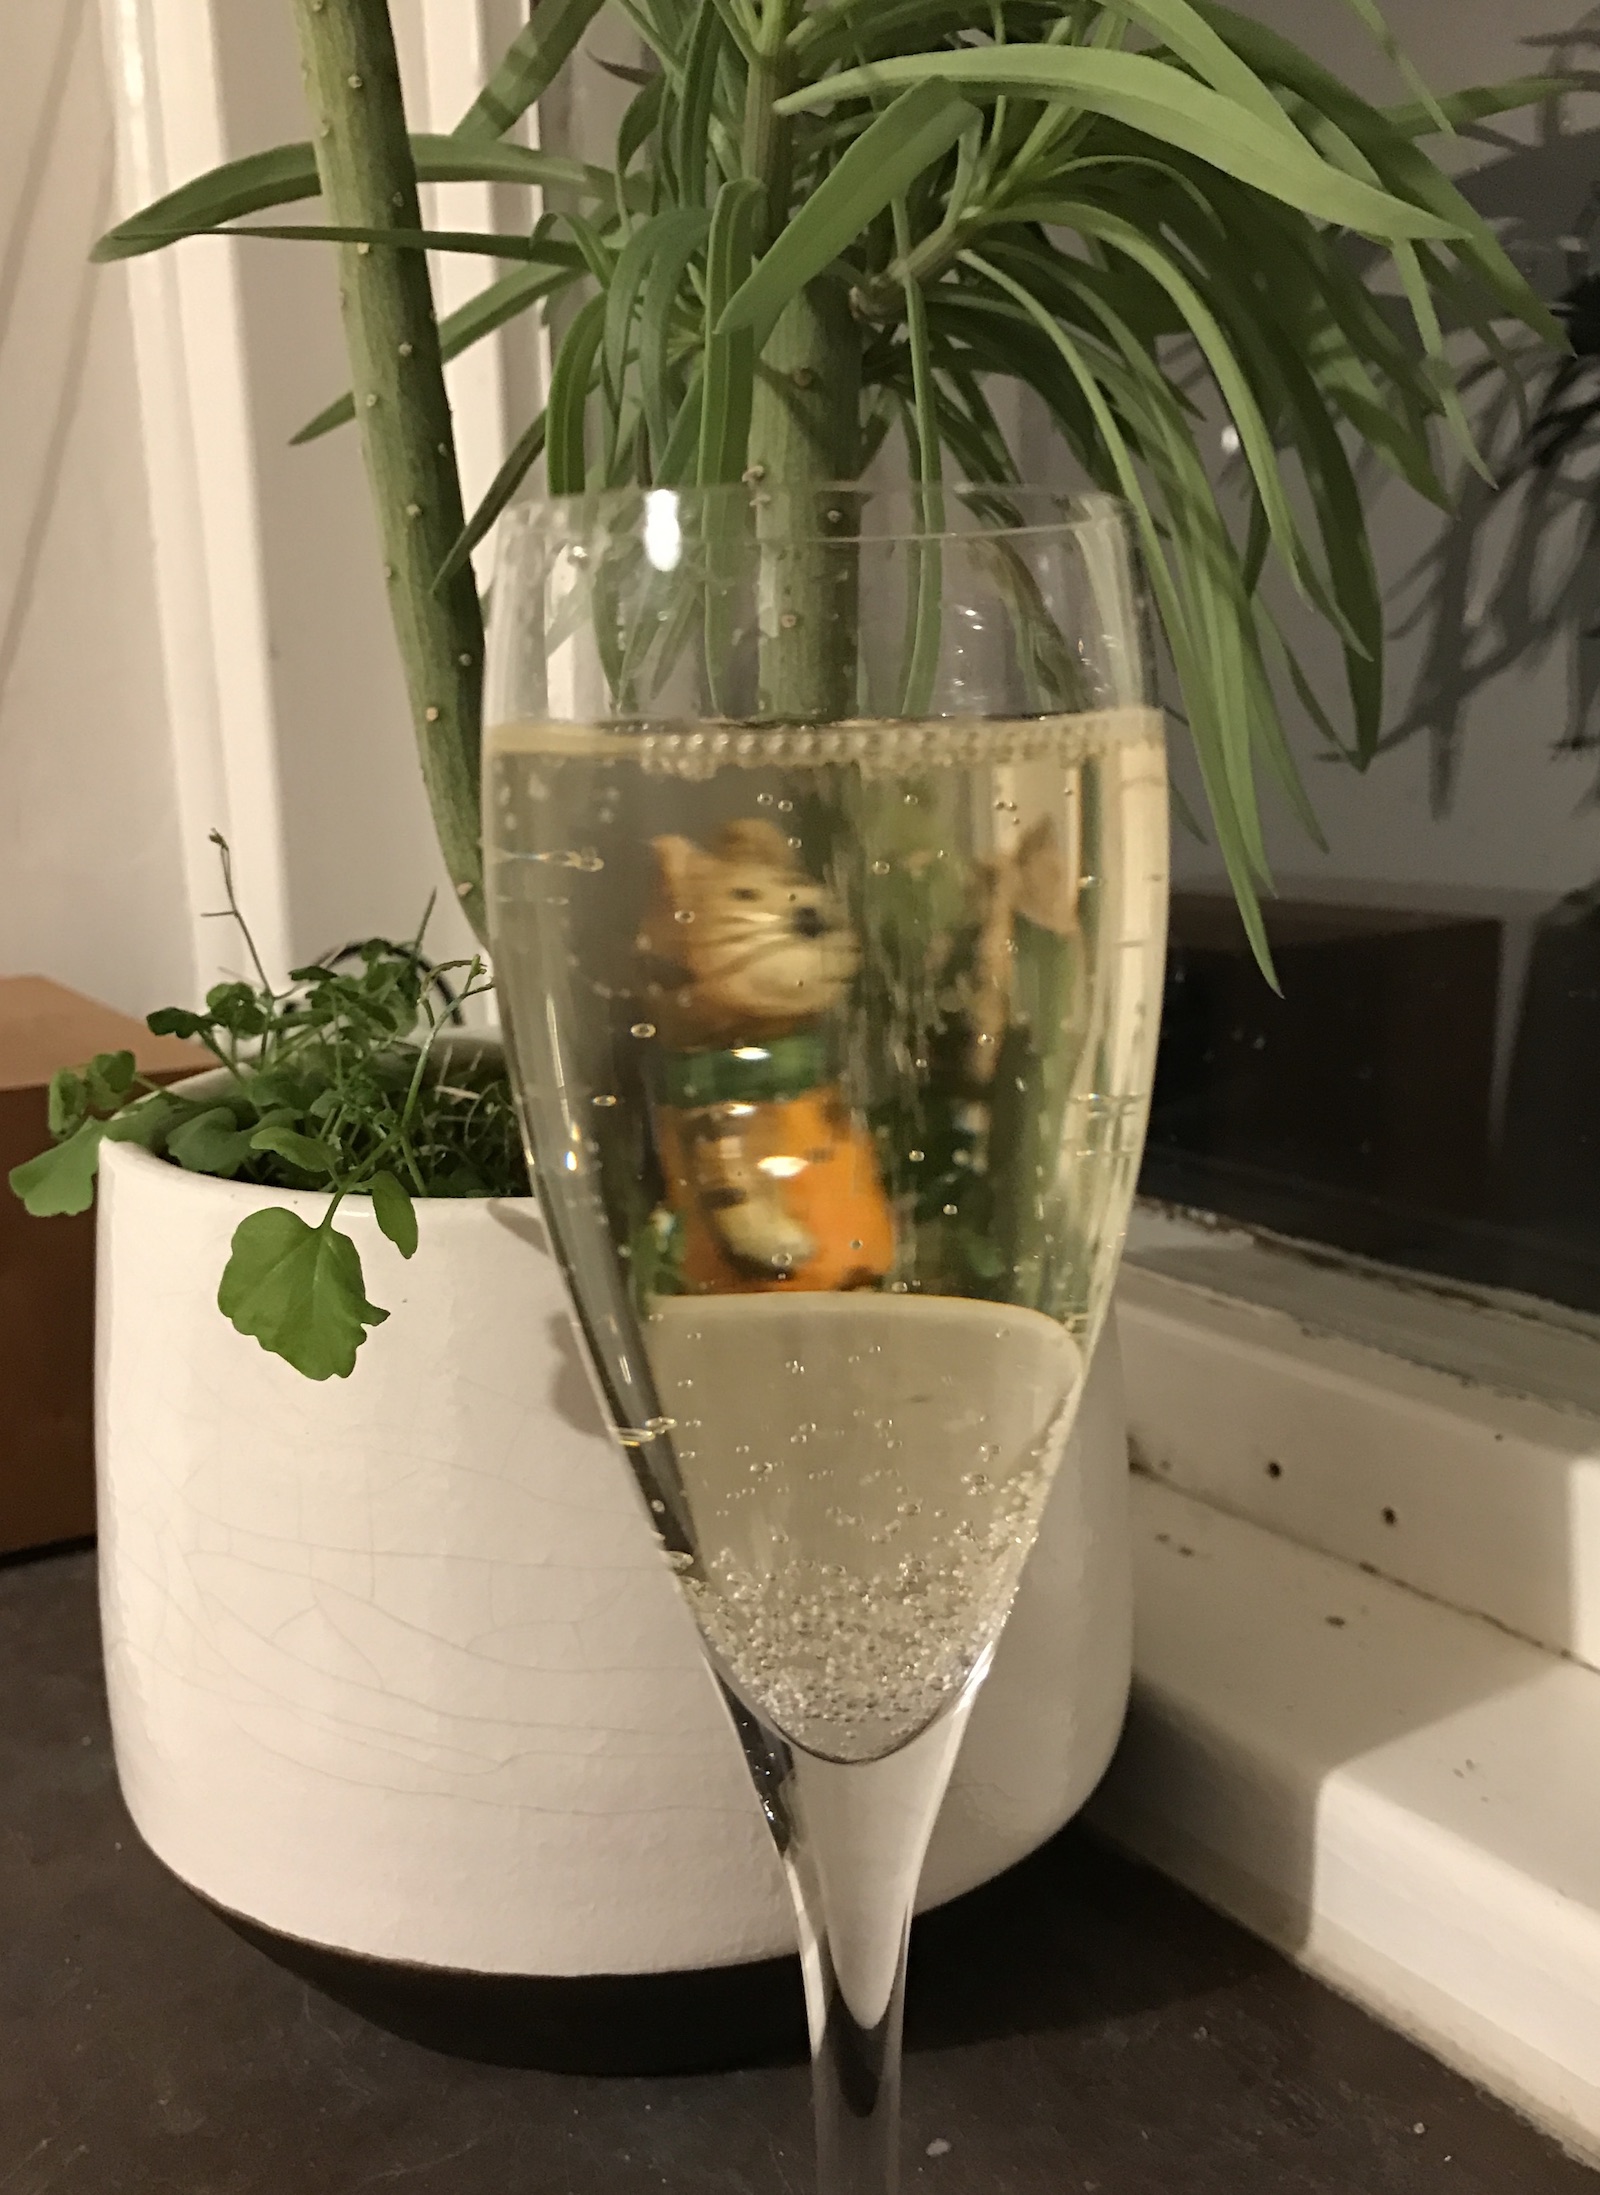 Tuesday night bubbles